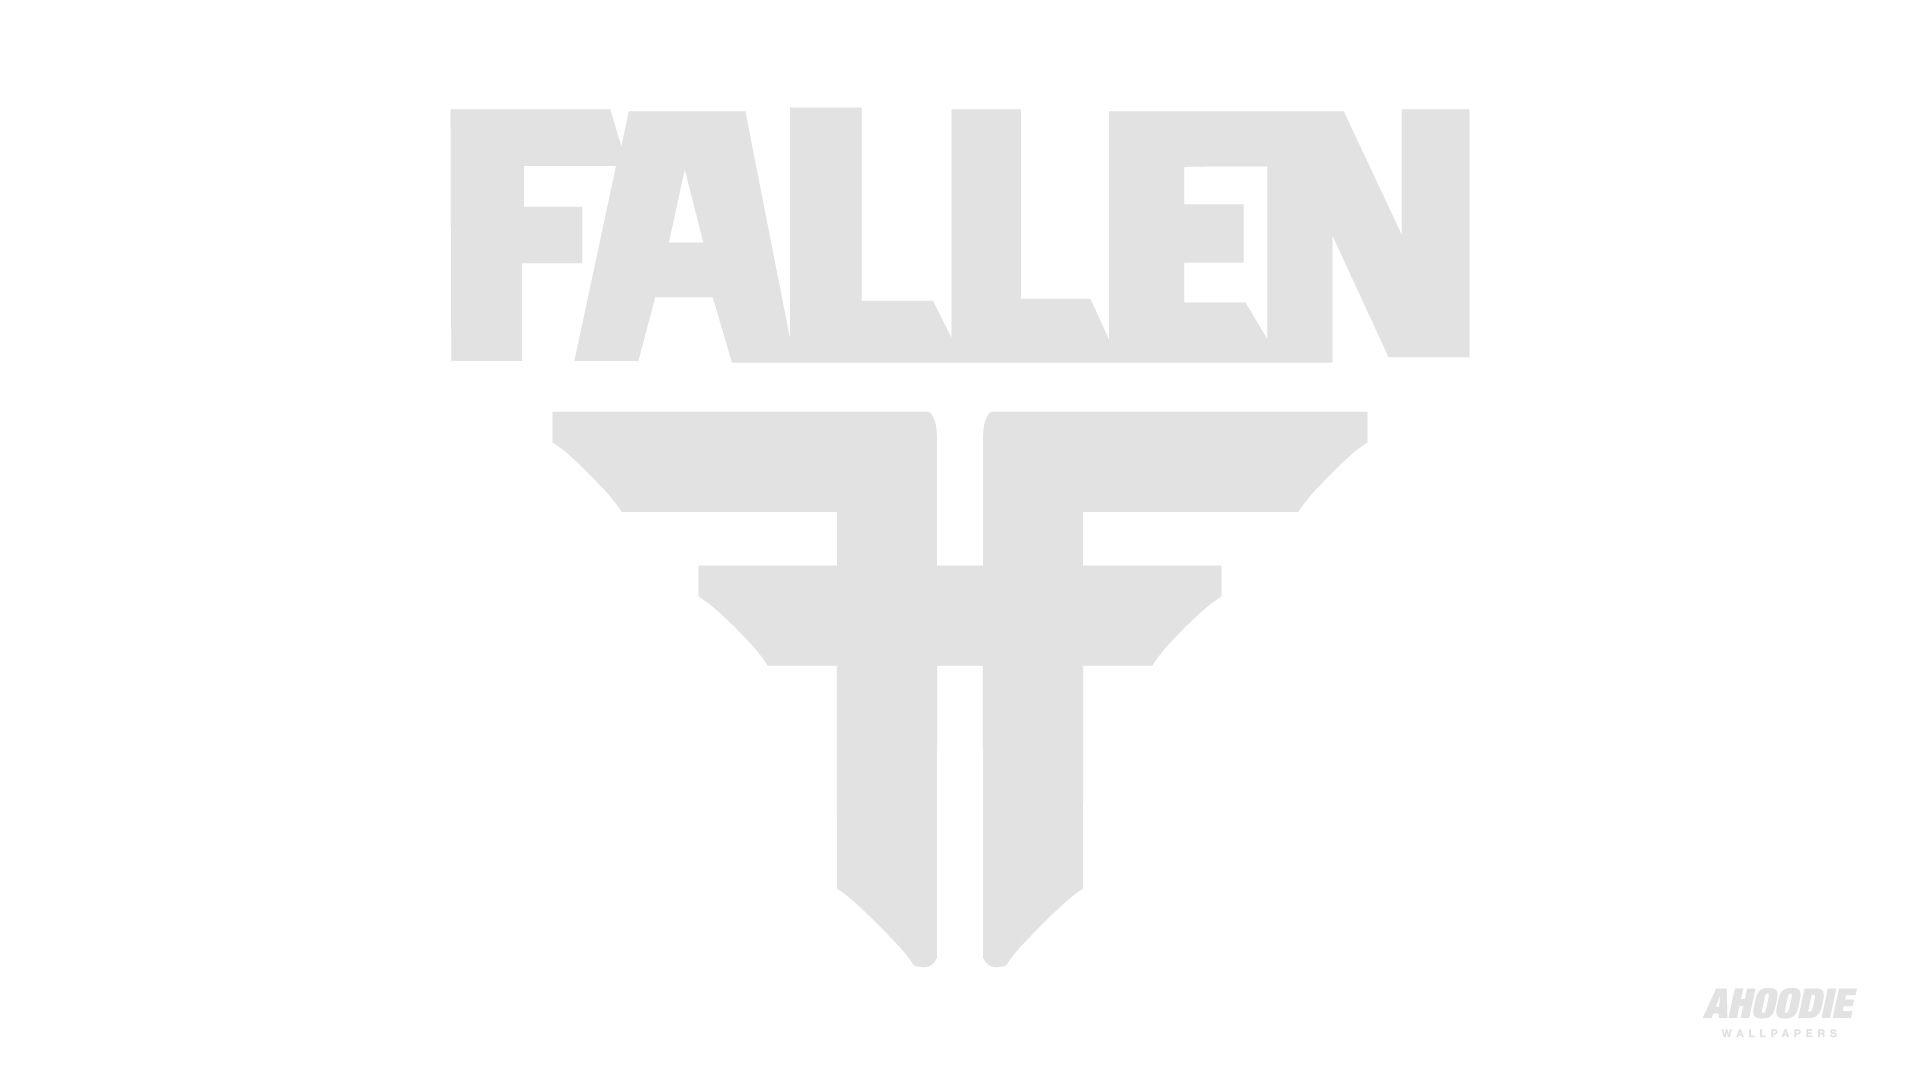 Wallpaper For > Fallen Shoes Logo Wallpaper